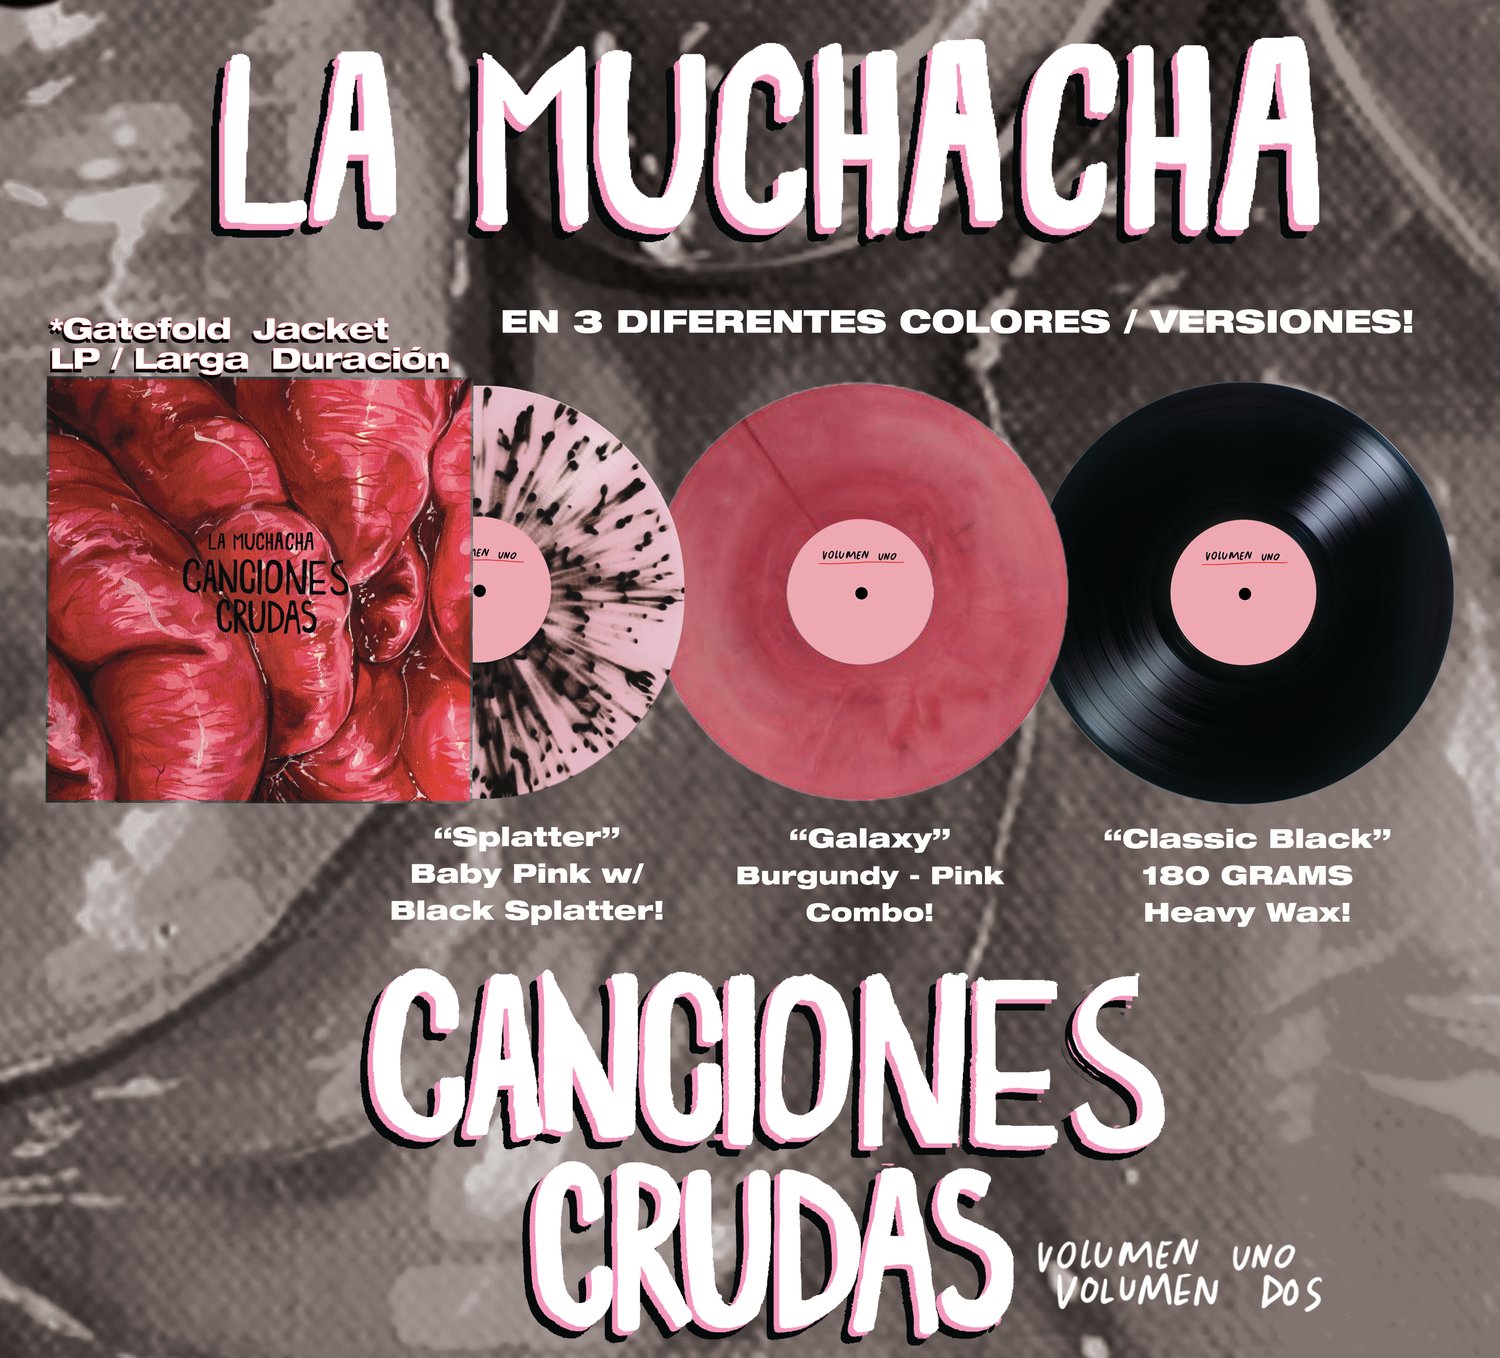 Image of La Muchacha - (LP) - "Canciones Crudas" - w/ Download Card - Glossy Gatefold Jacket!